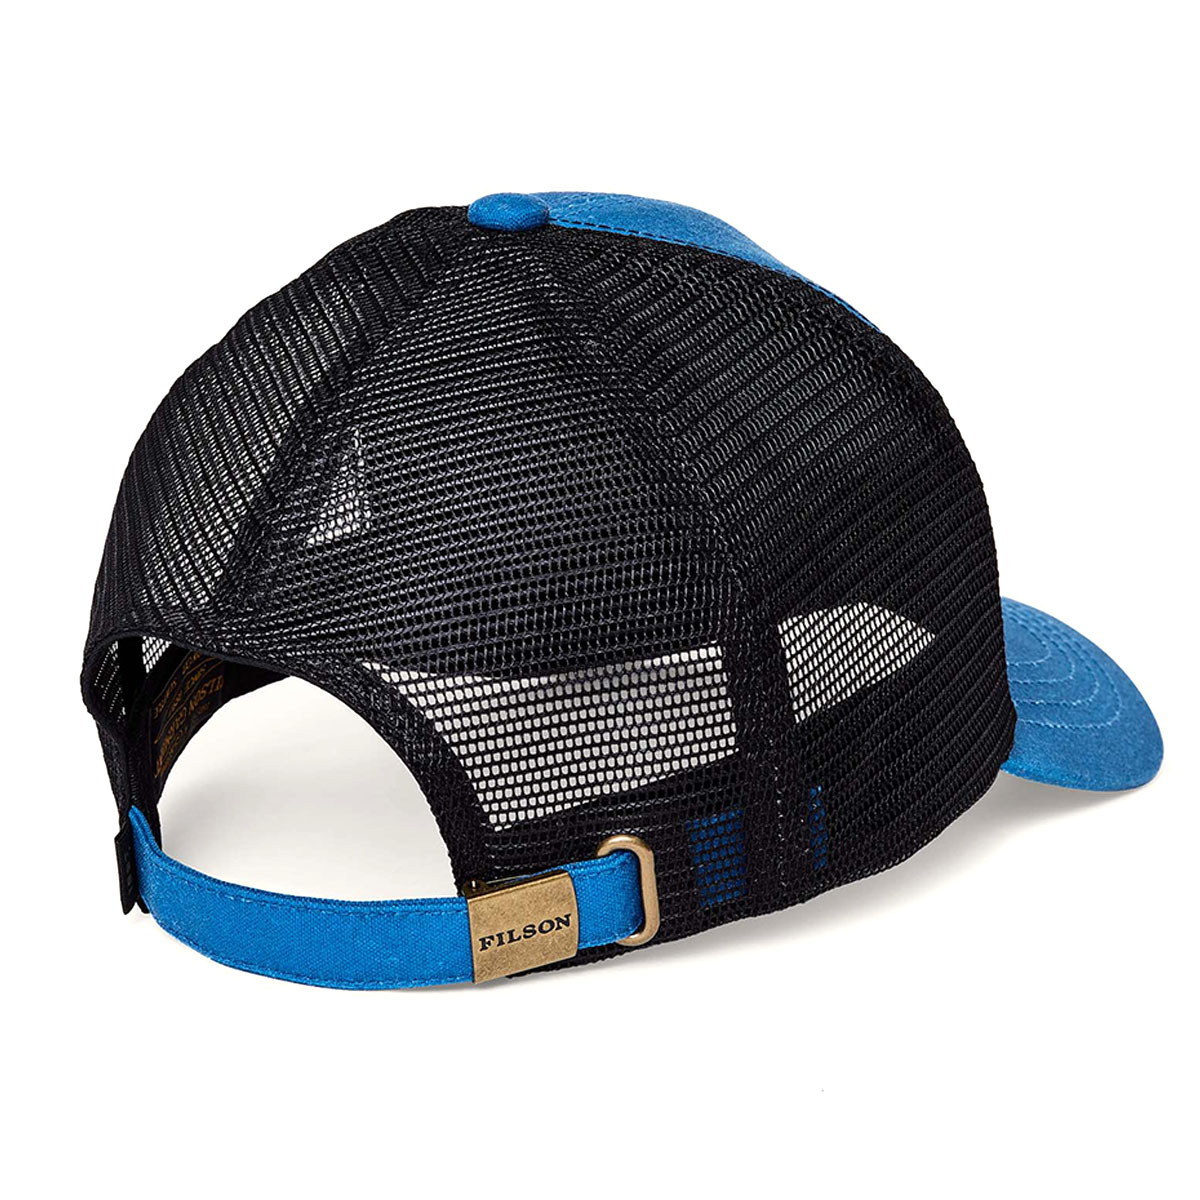 Filson Logger Mesh Cap Marlin Blue, iconic cap made of durableTin Cloth